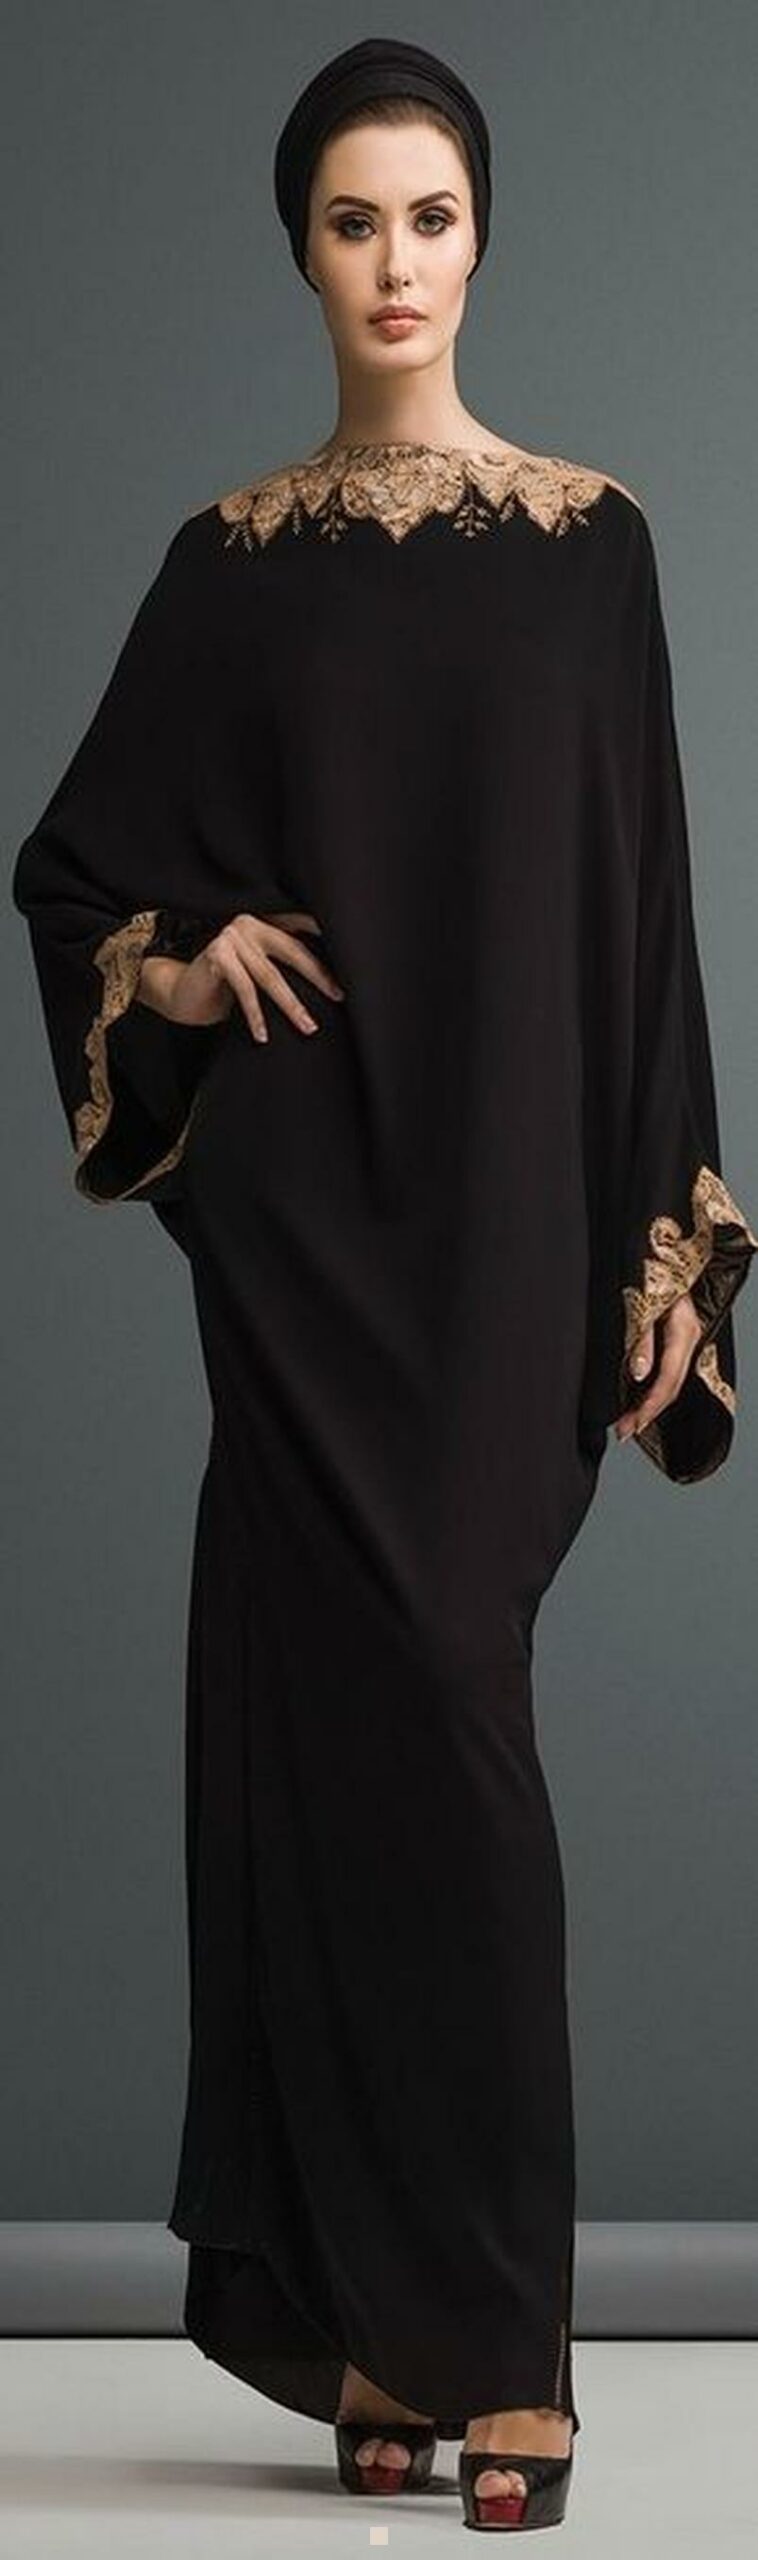 Comment porter une abaya